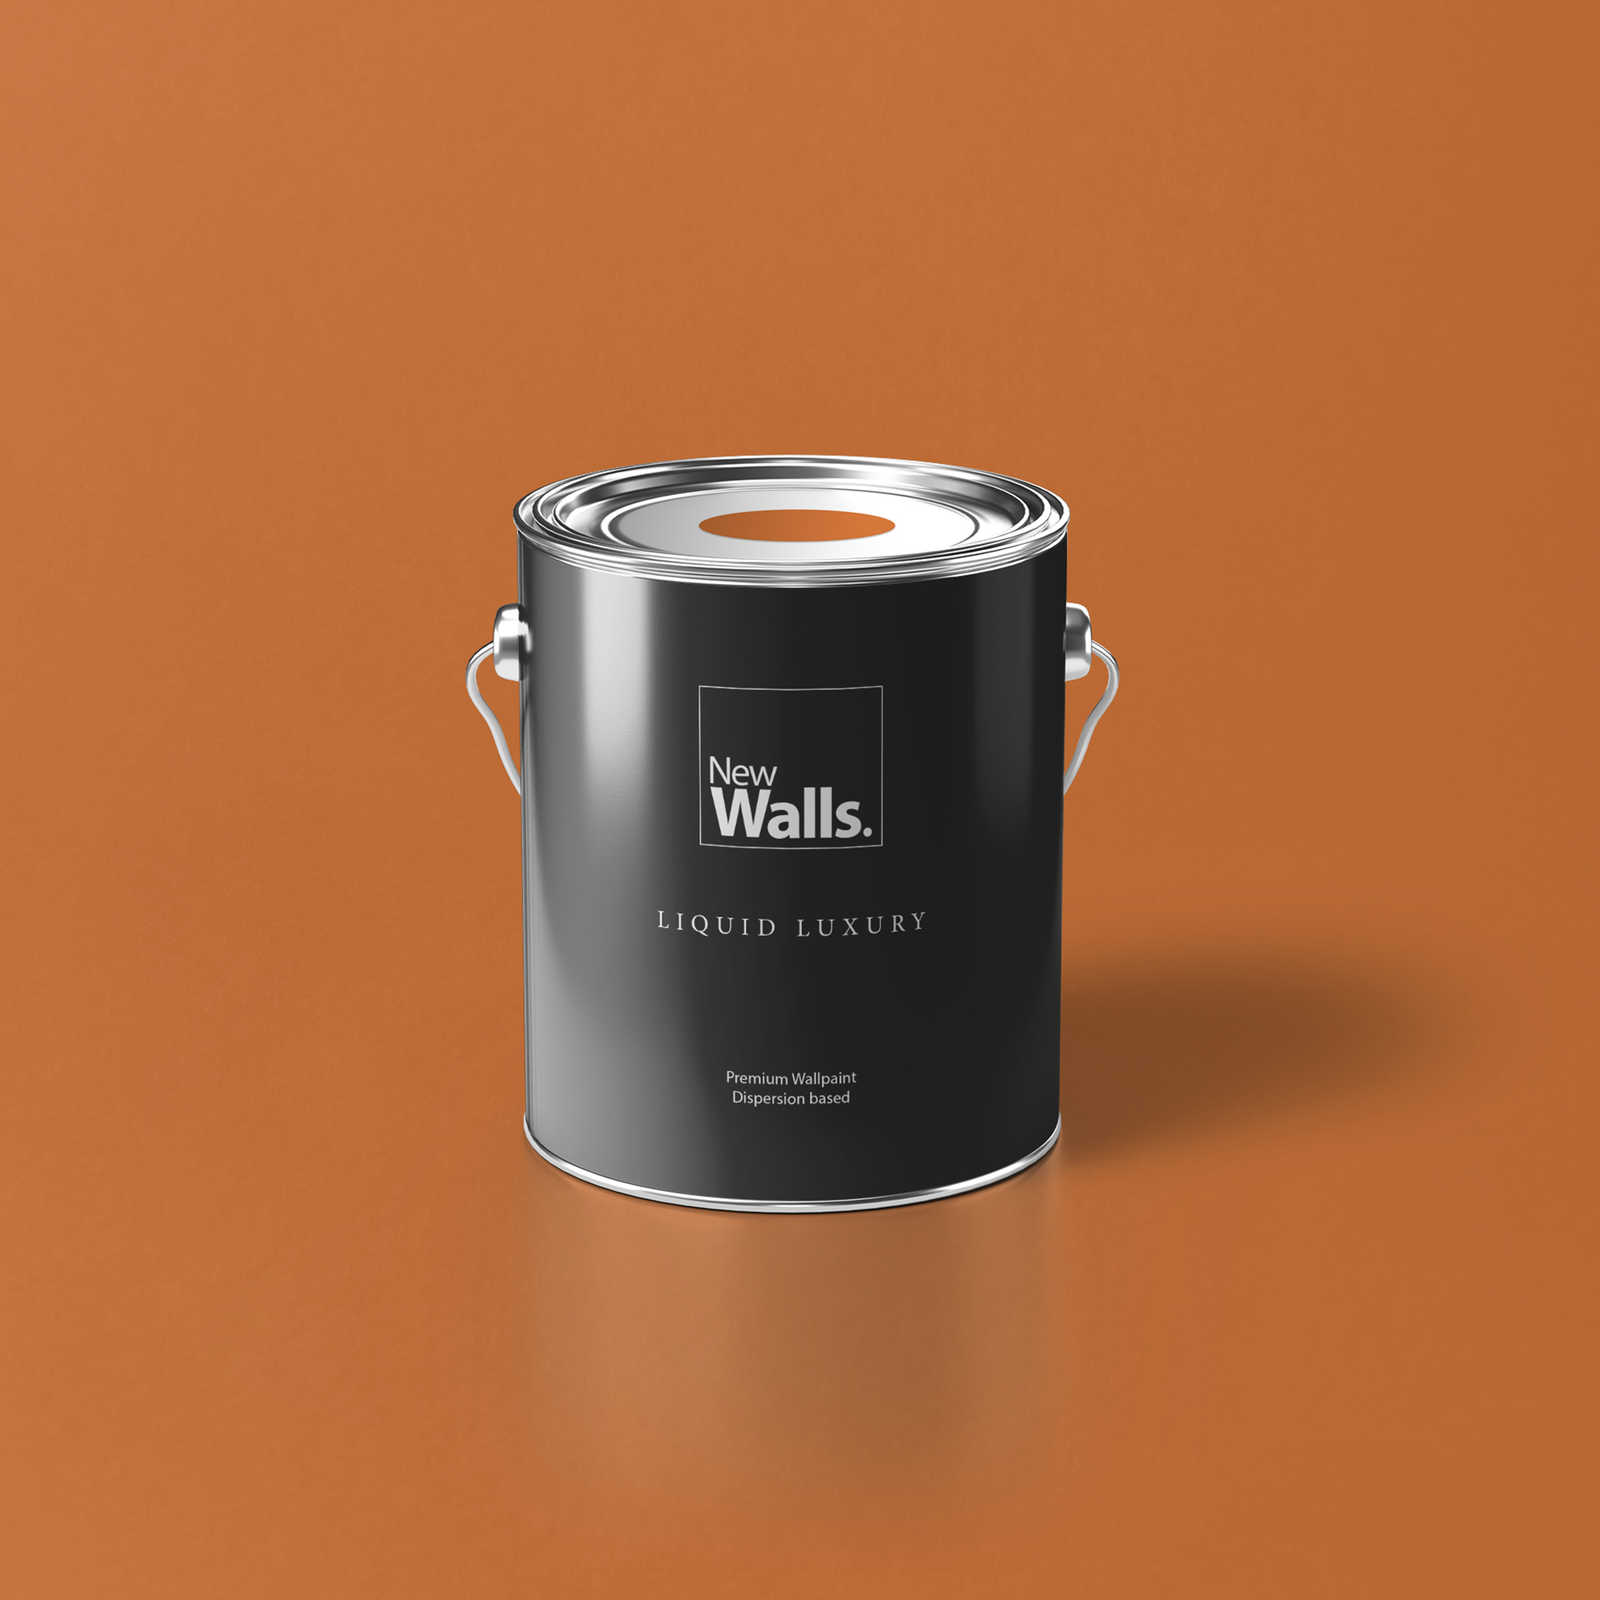 Premium Wall Paint Warm Orange »Pretty Peach« NW903 – 2.5 litre
